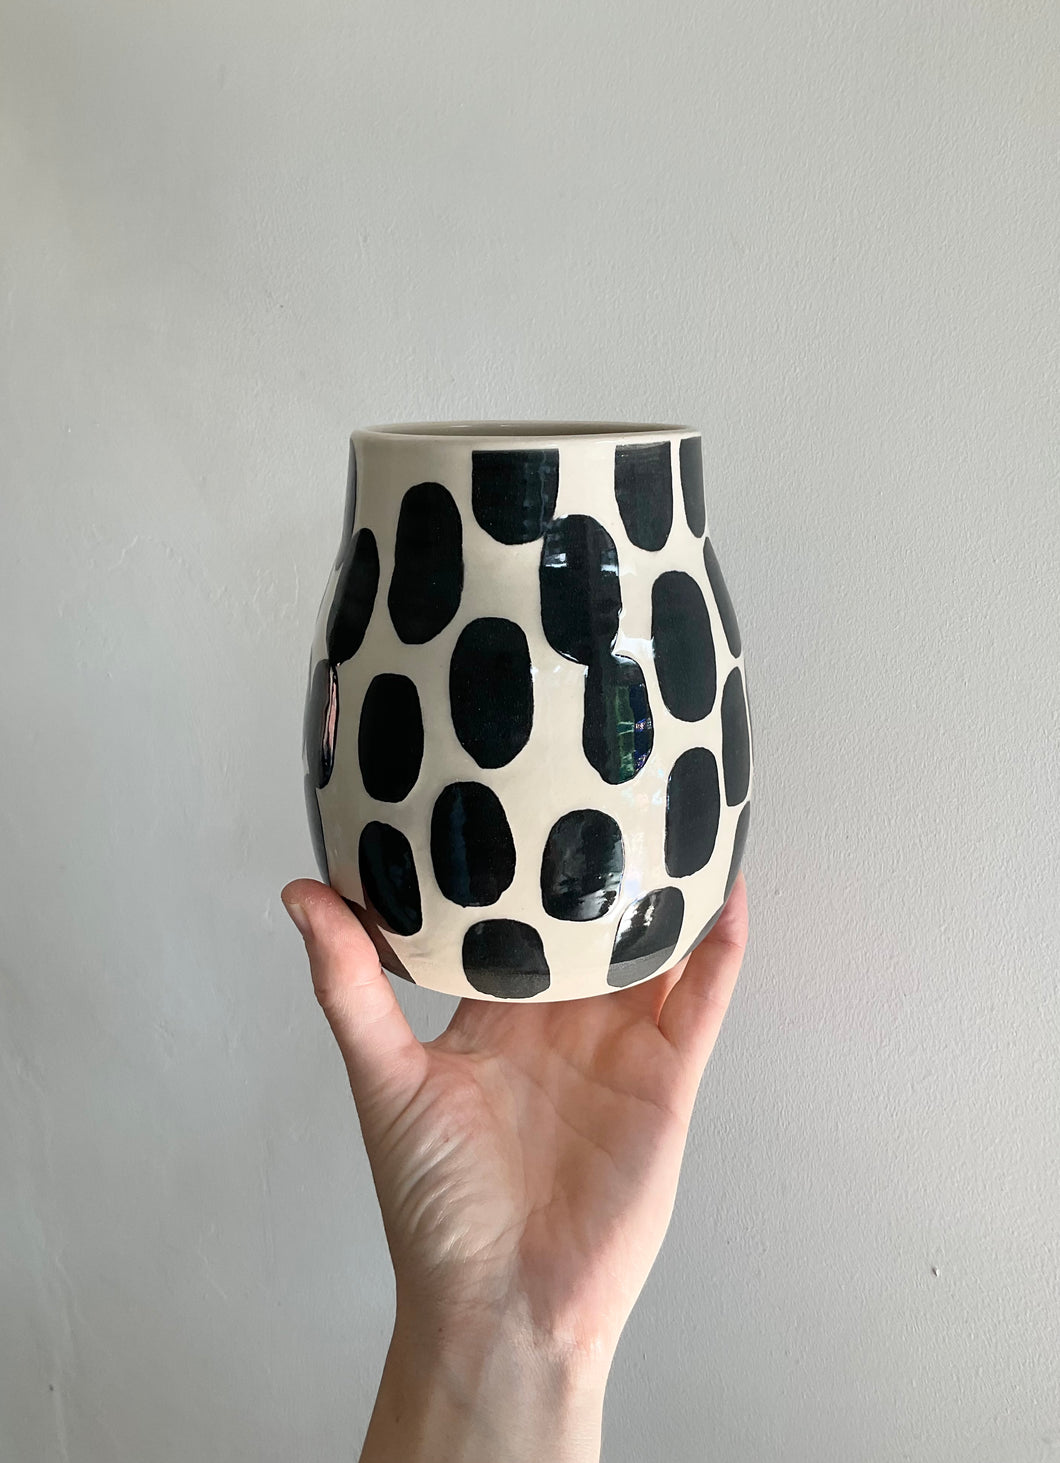 Monochrome Blobs Vase